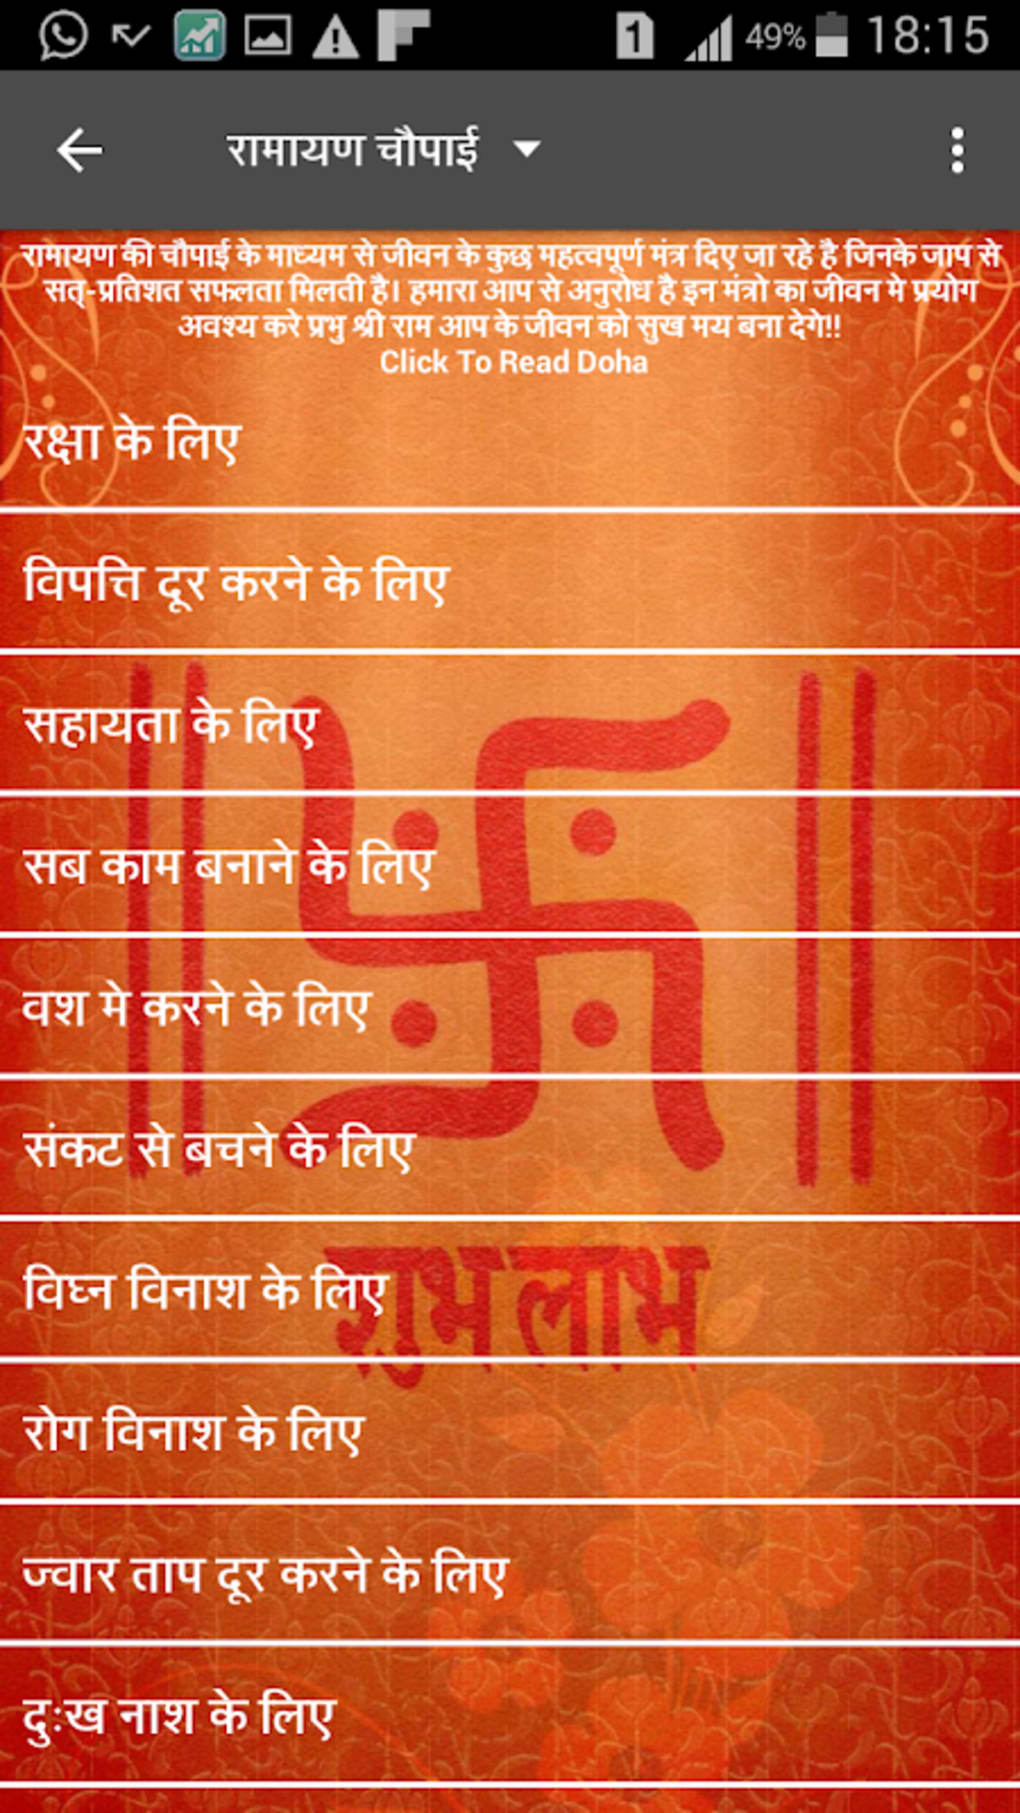 Hindu Calendar 2020 APK for Android - Download